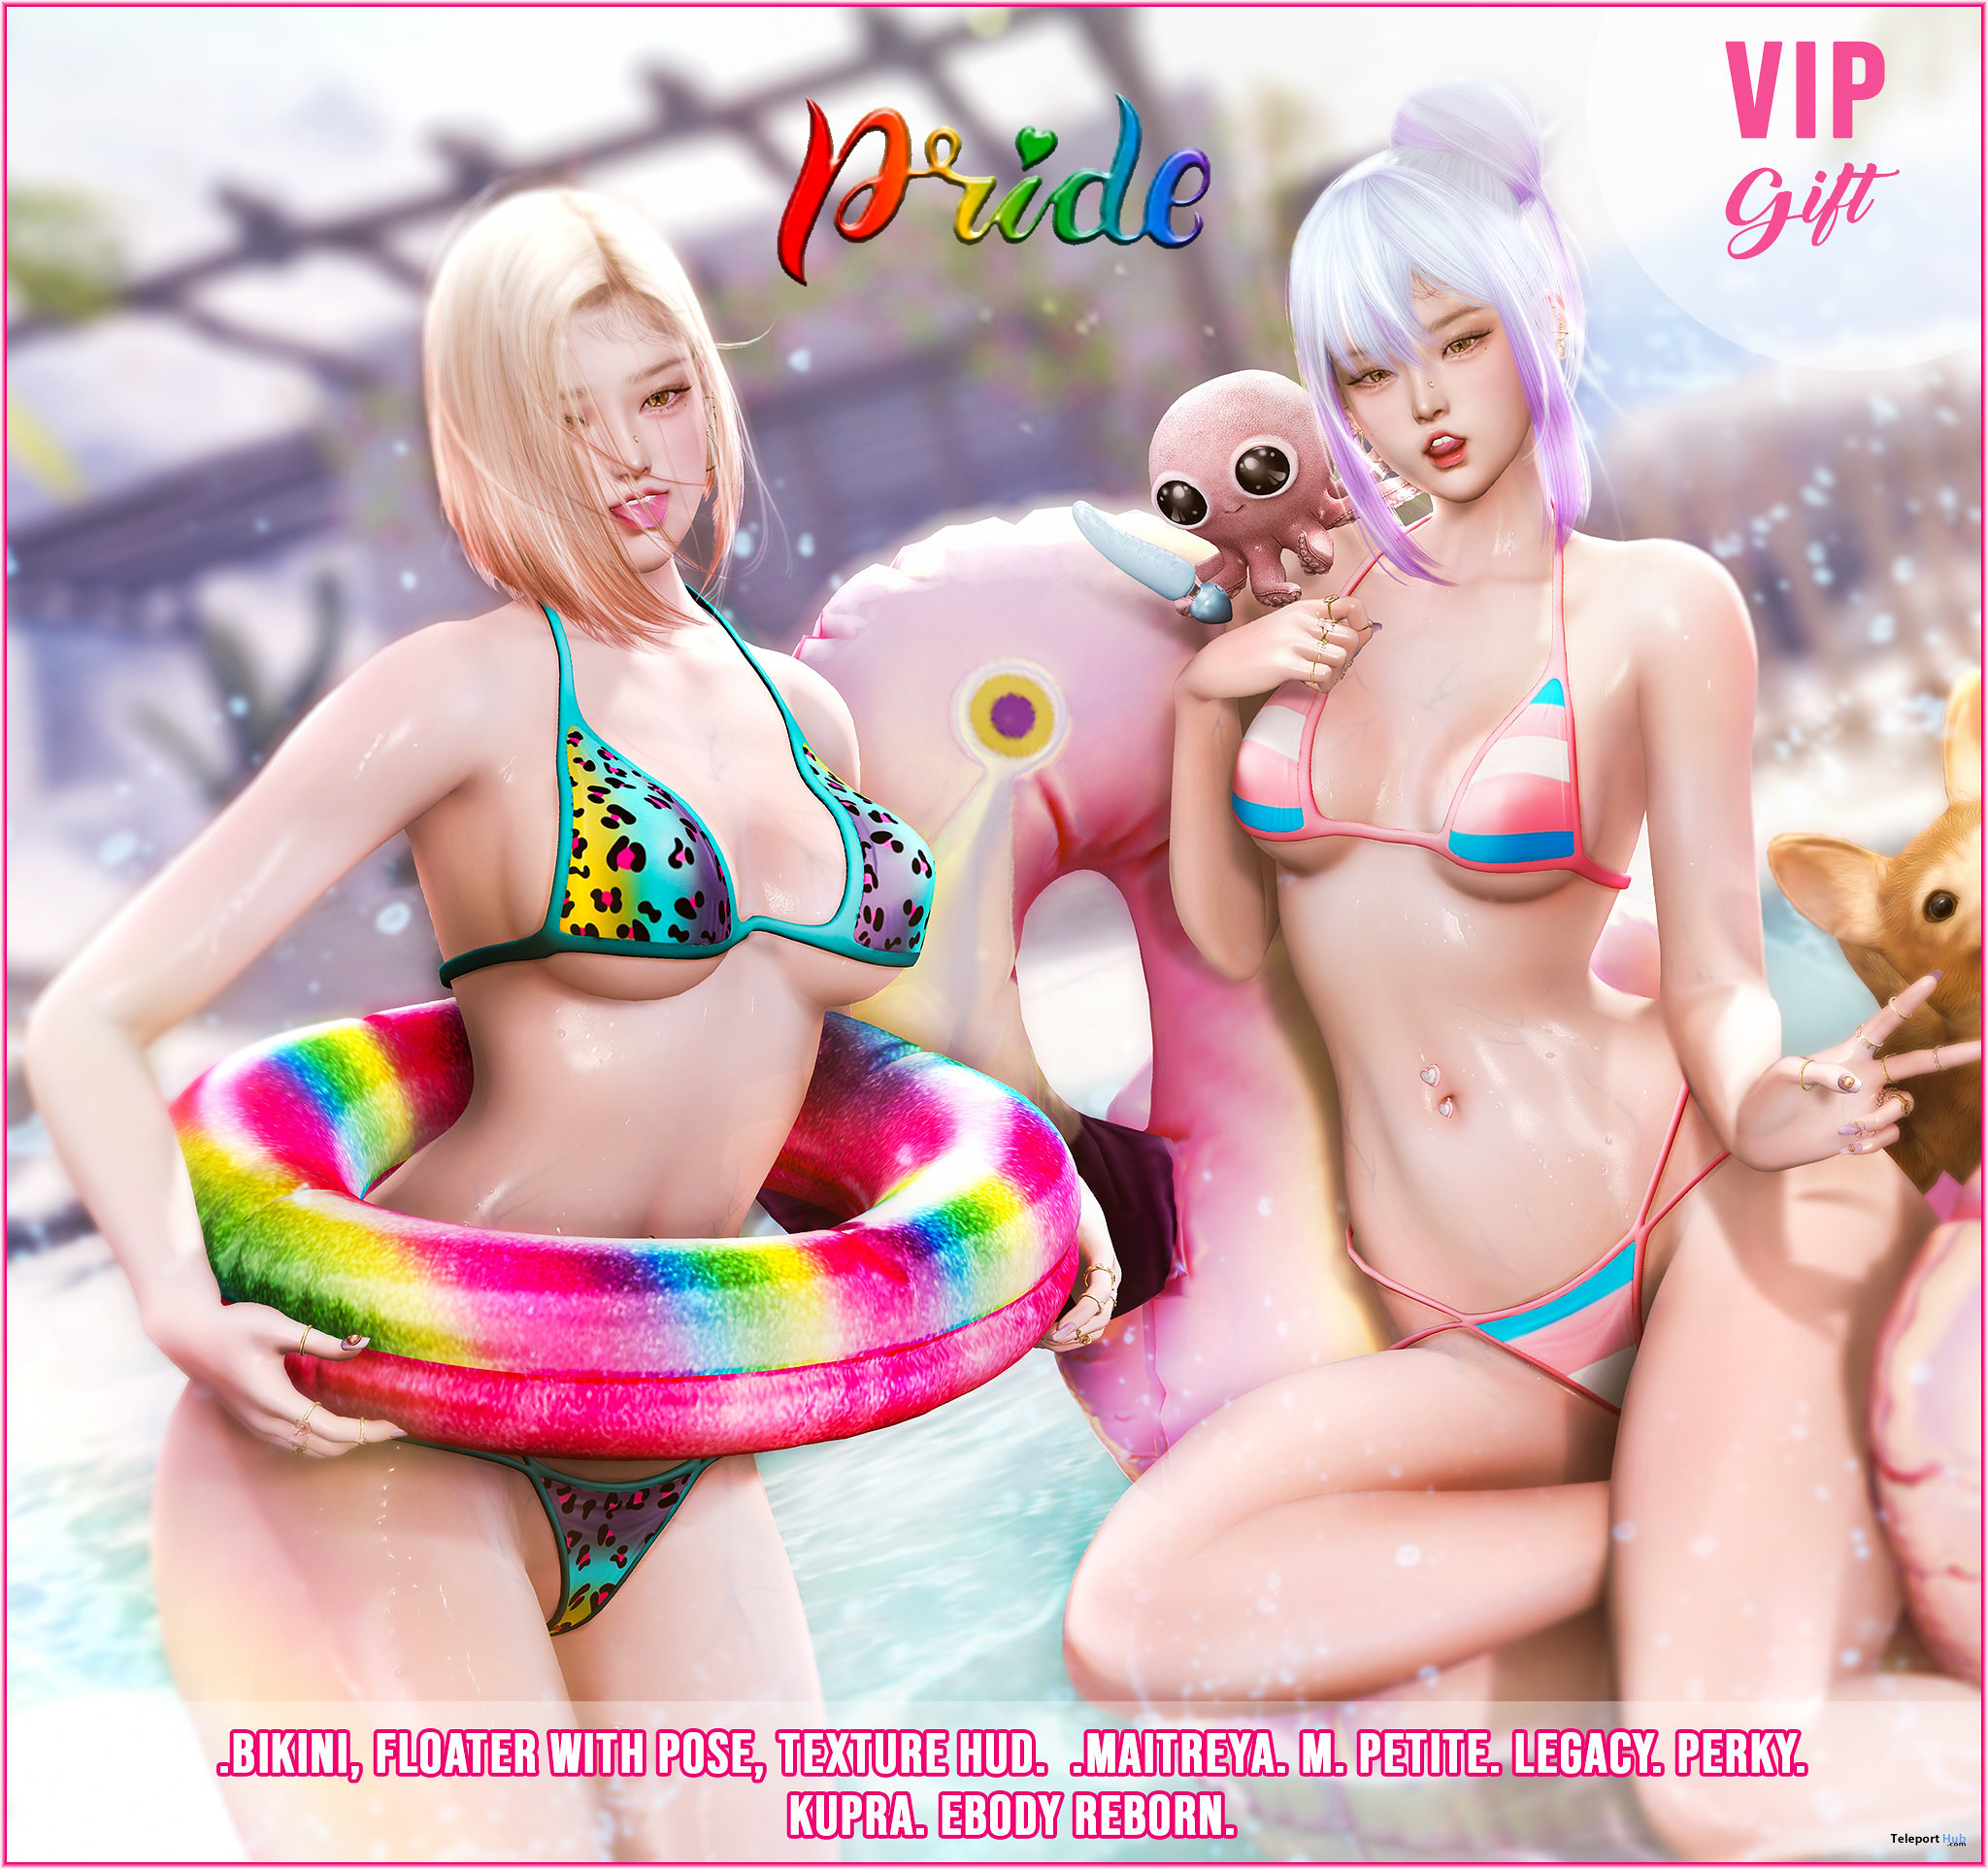 Pride Bikini & Floater June 2022 Group Gift by Luas - Teleport Hub - teleporthub.com